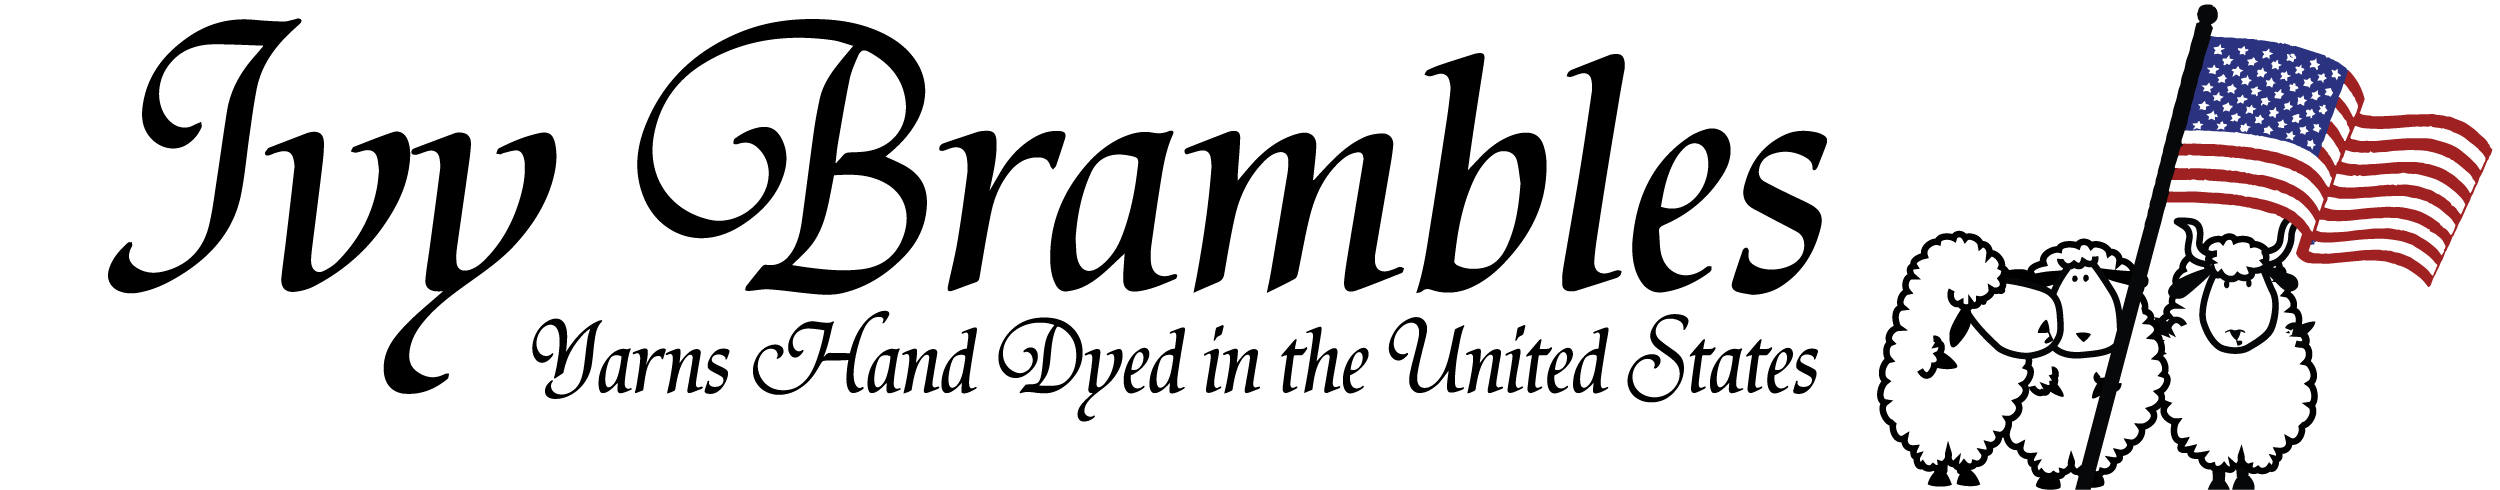 Ivy Brambles Cashmere 4-Ply Yarn